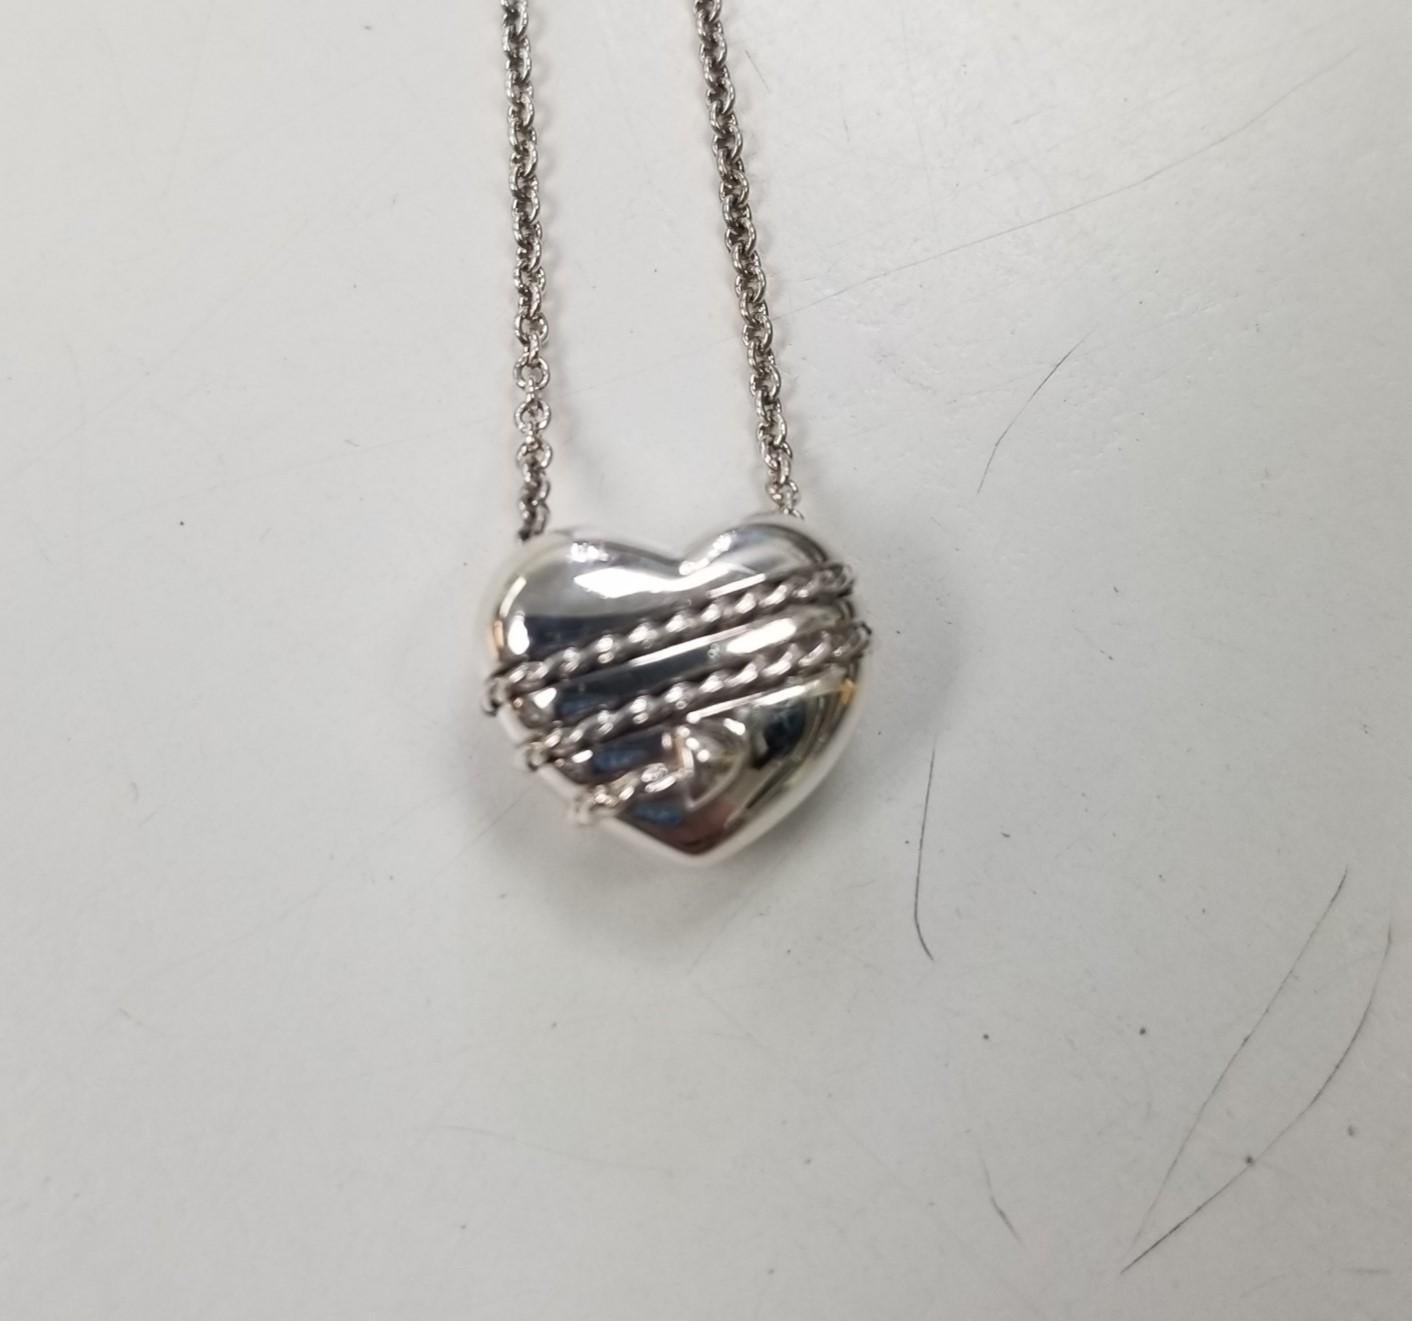 tiffany heart necklace silver